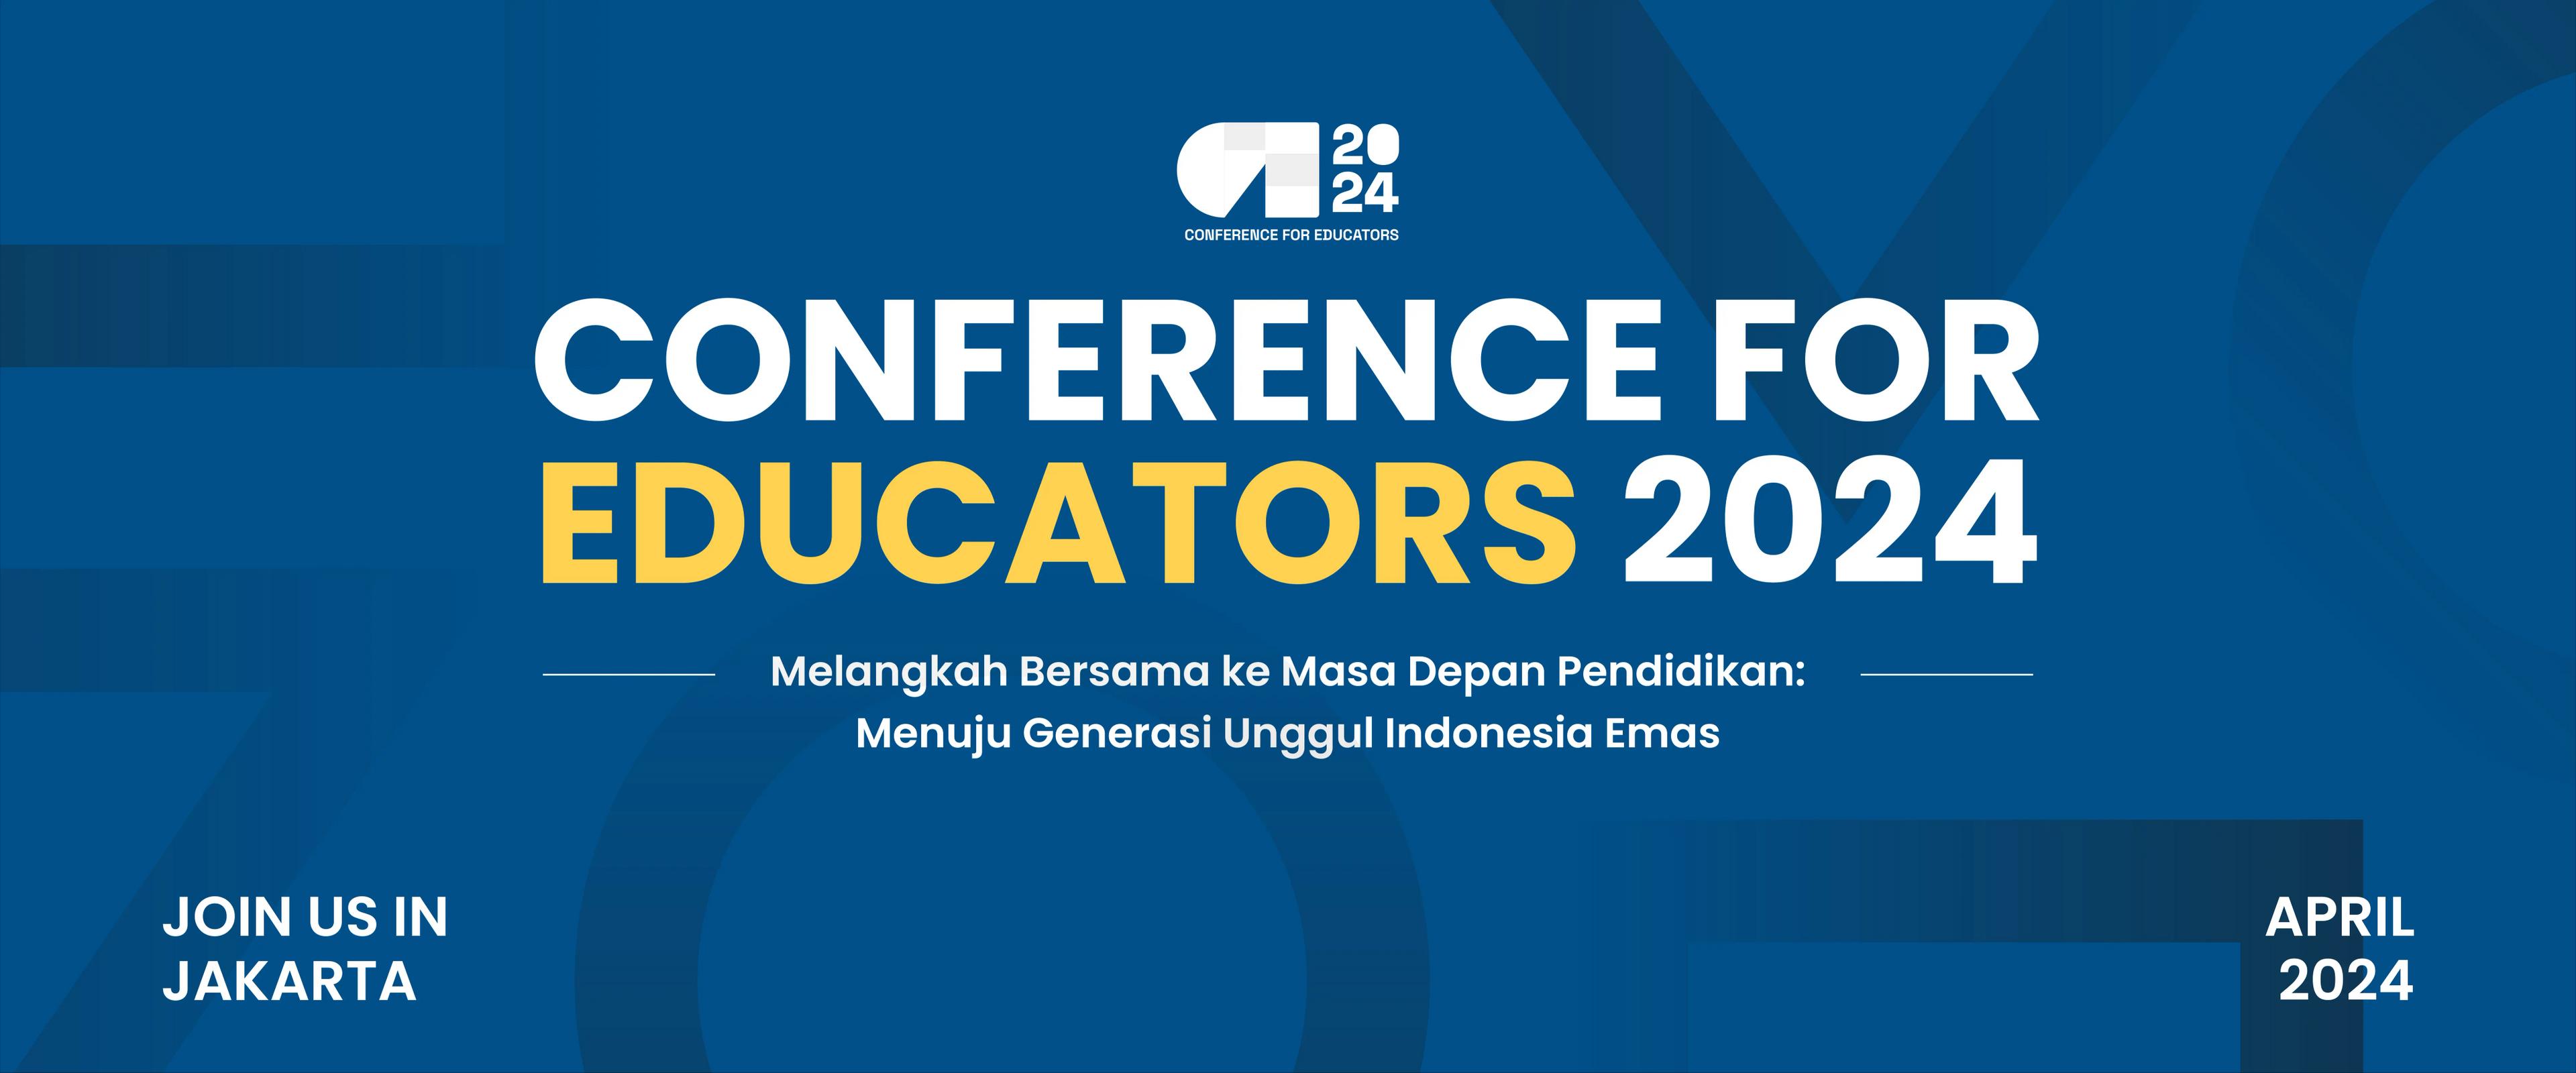 MyEduSolve Kembali Gelar Conference for Educators 2024 cover